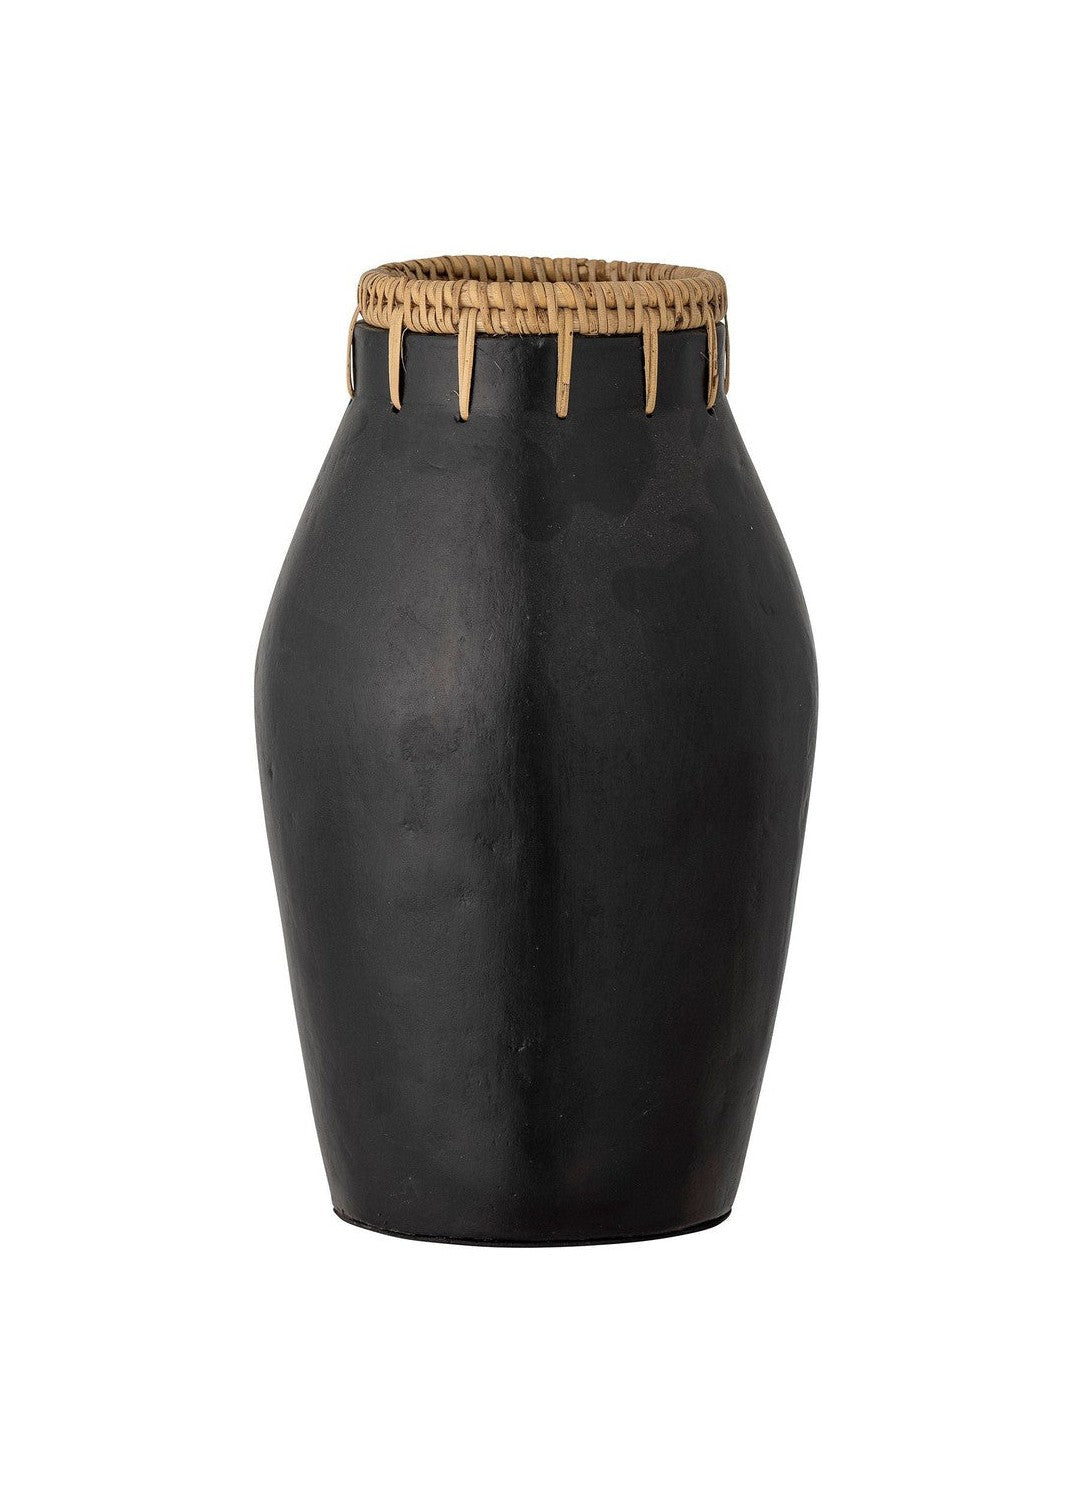 Bloomingville Dixon Deco Vase, Black, Terracotta